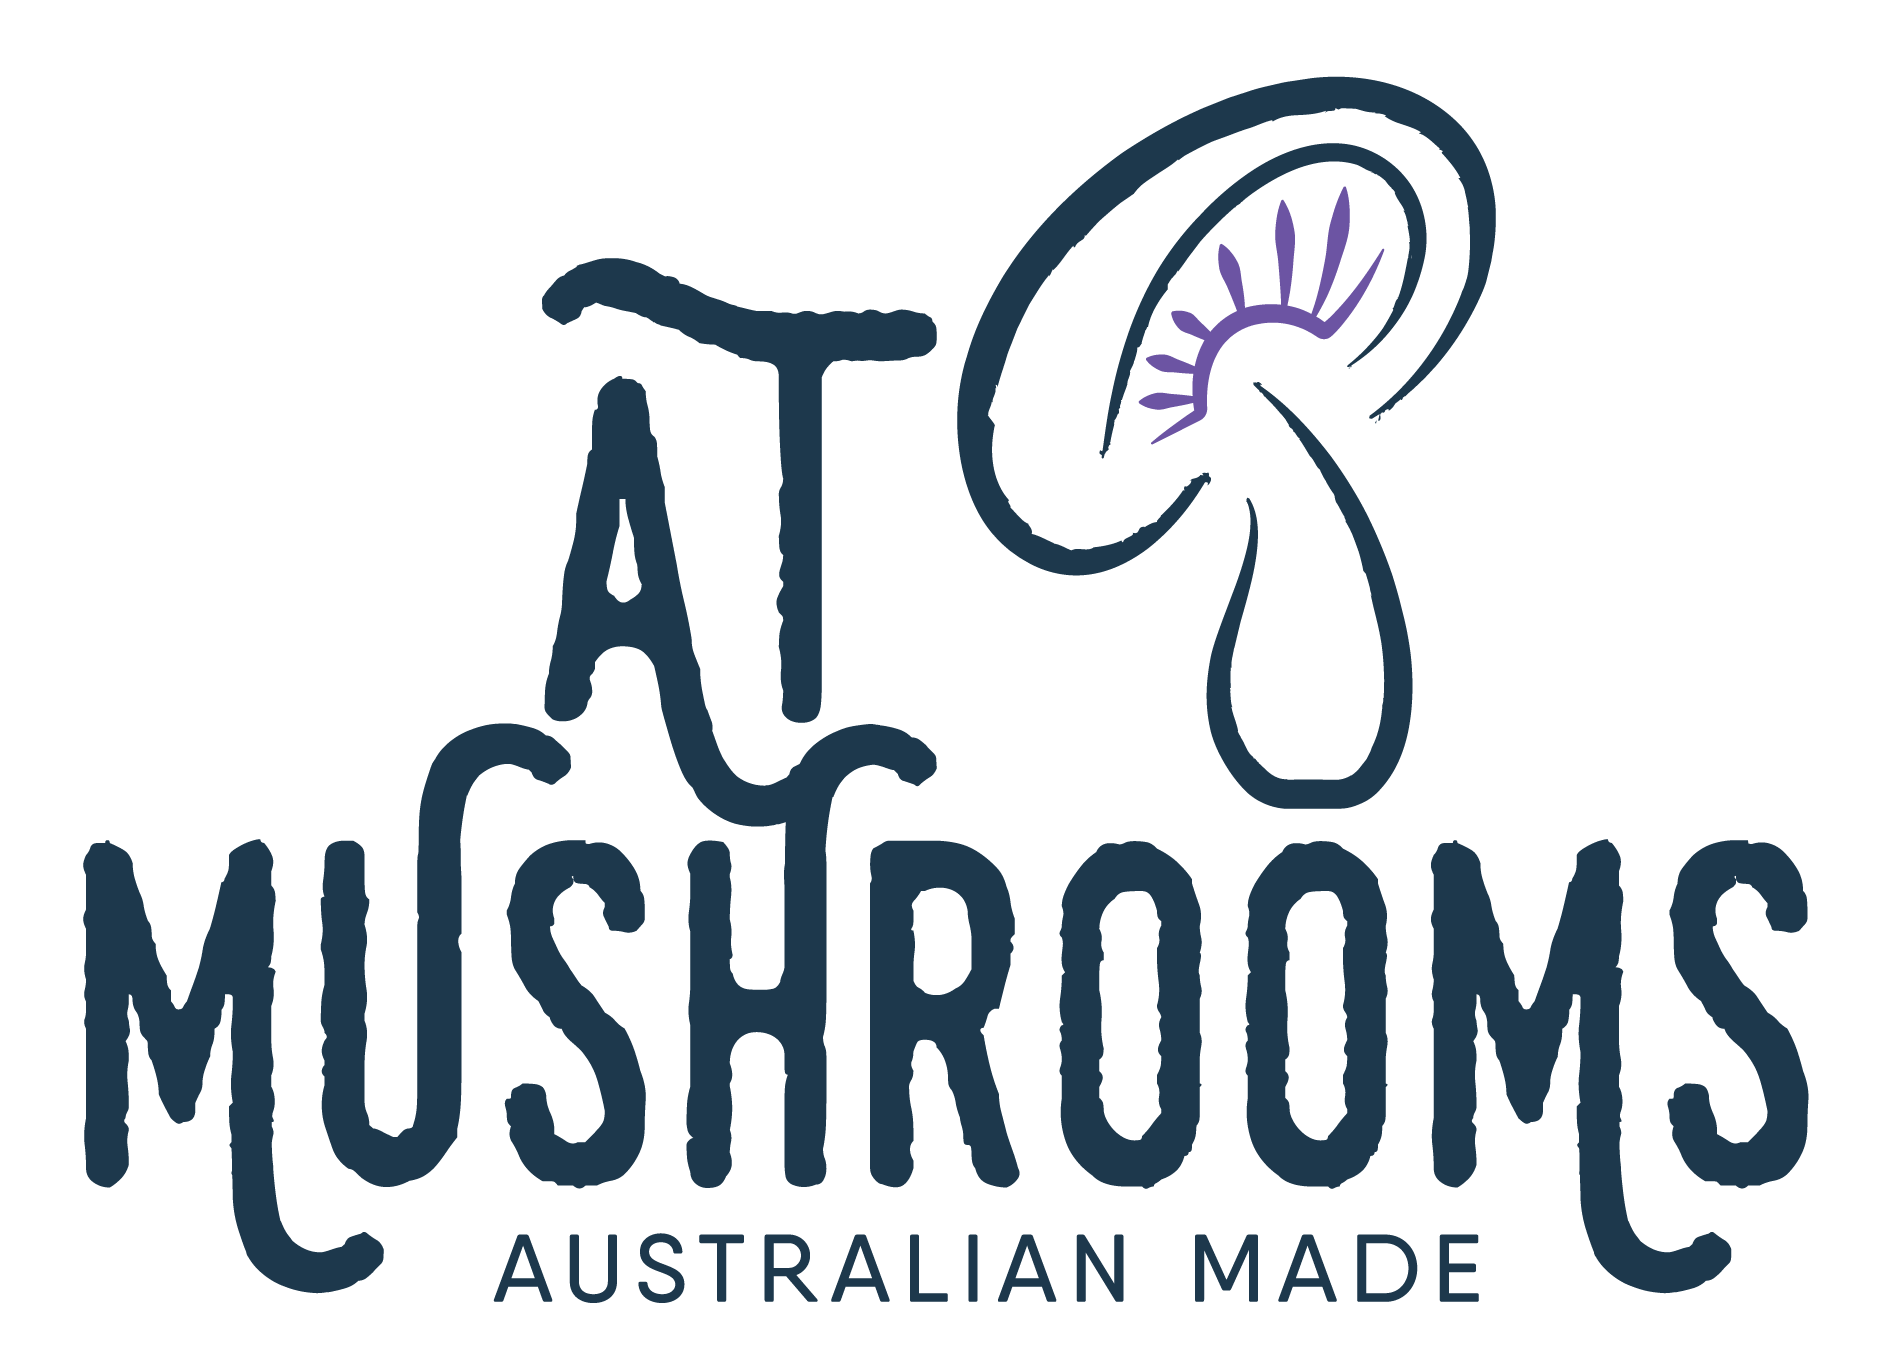 AT Mushrooms Australian Made Maitake Logo, Mushroom Gills Purple